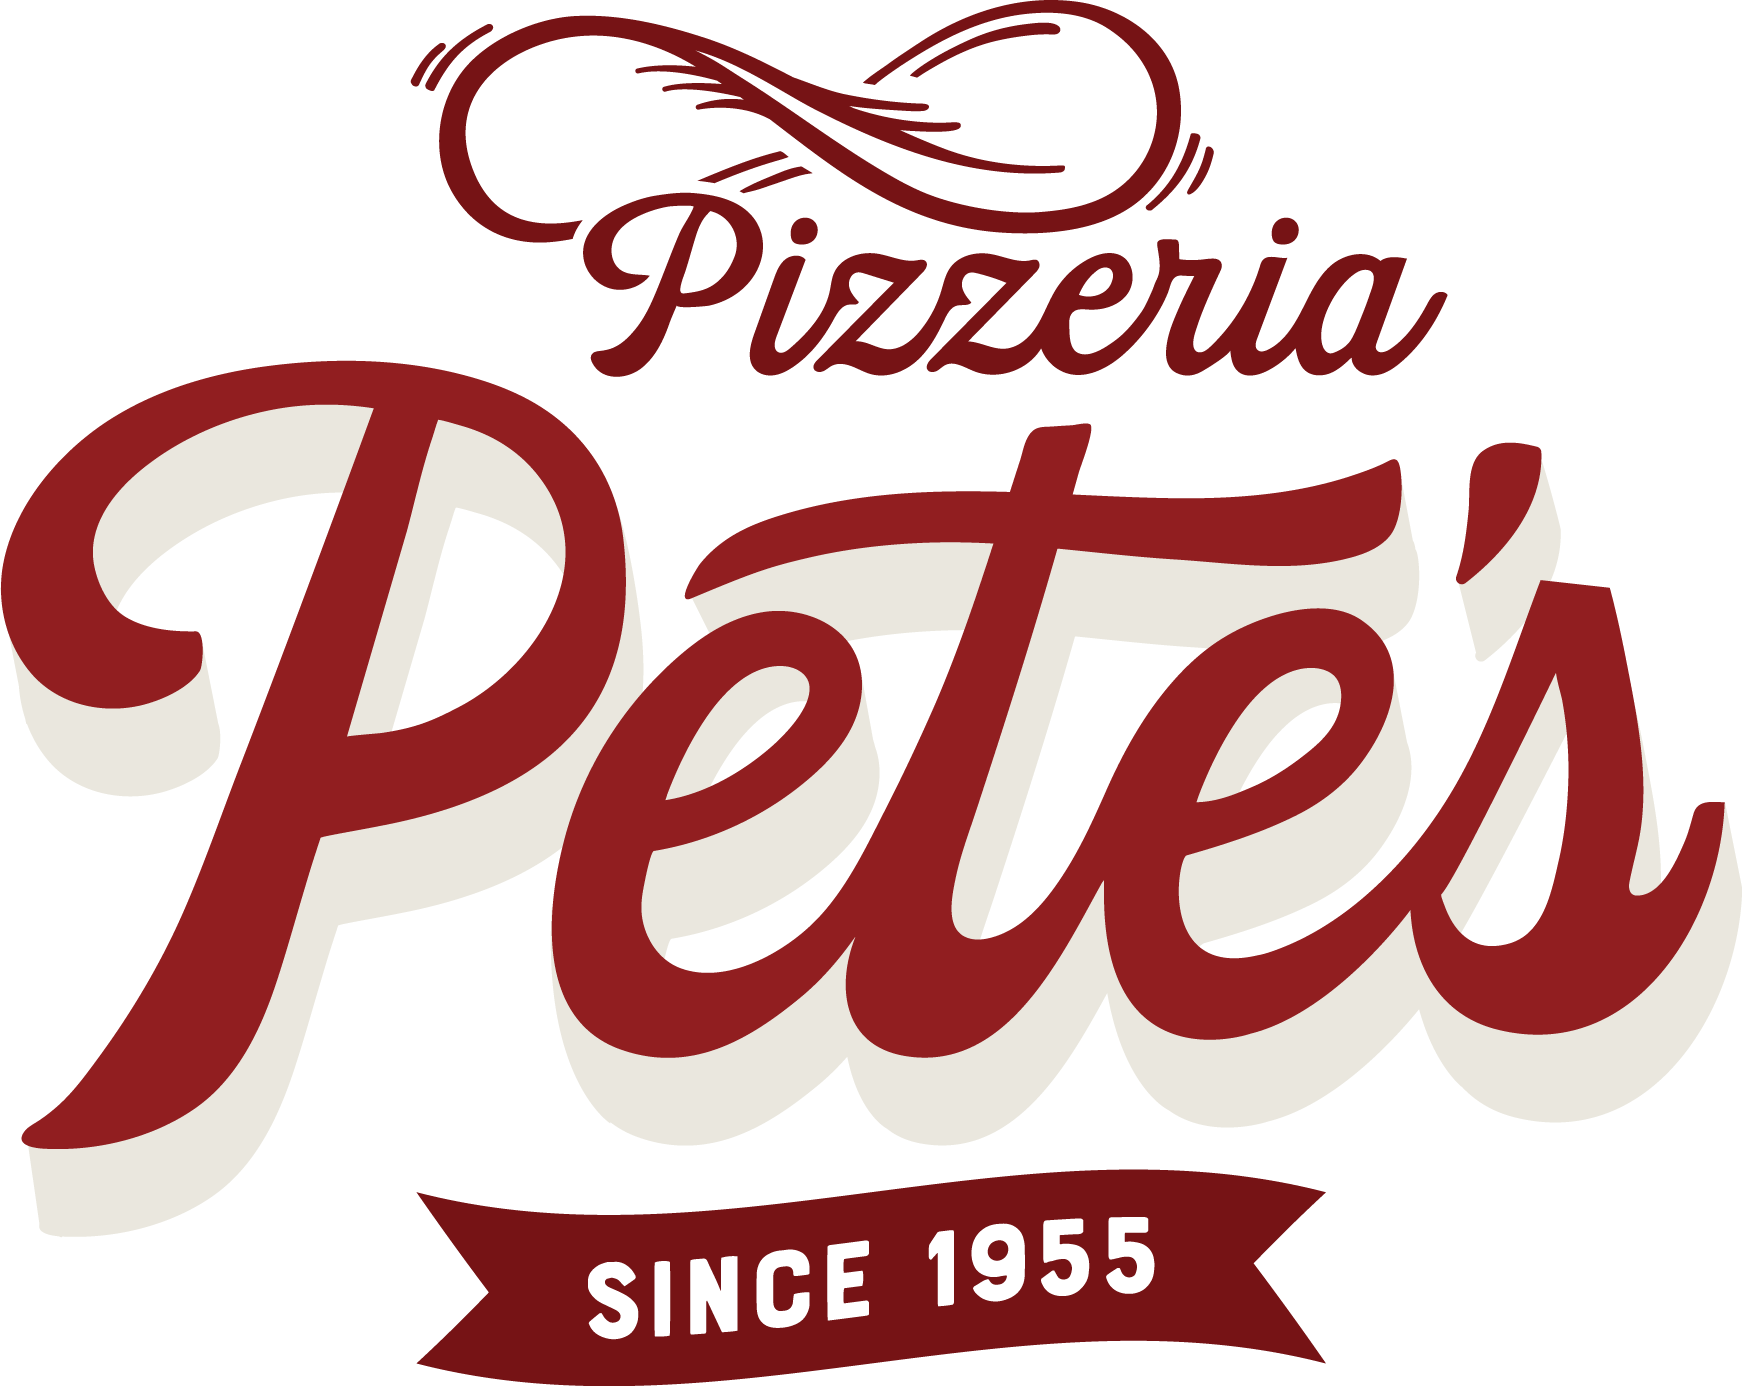 Pete’s Pizza